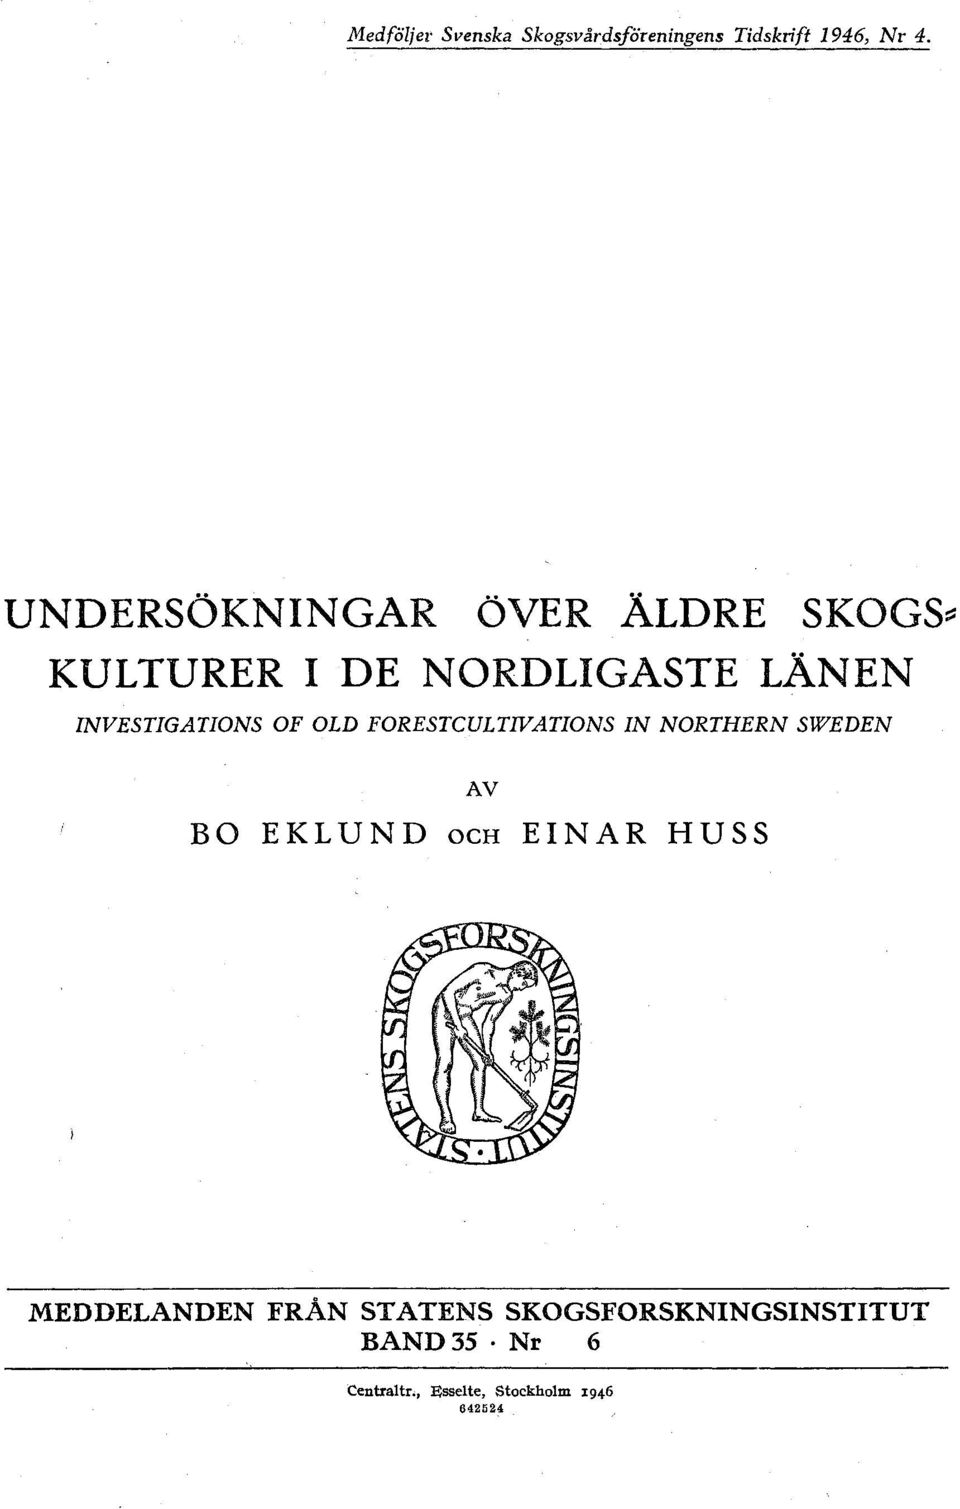 INVESTIGATIONS OF OLD FORESTCULTWATIONS IN NORTHERN SWEDEN AV BO EKLUND och